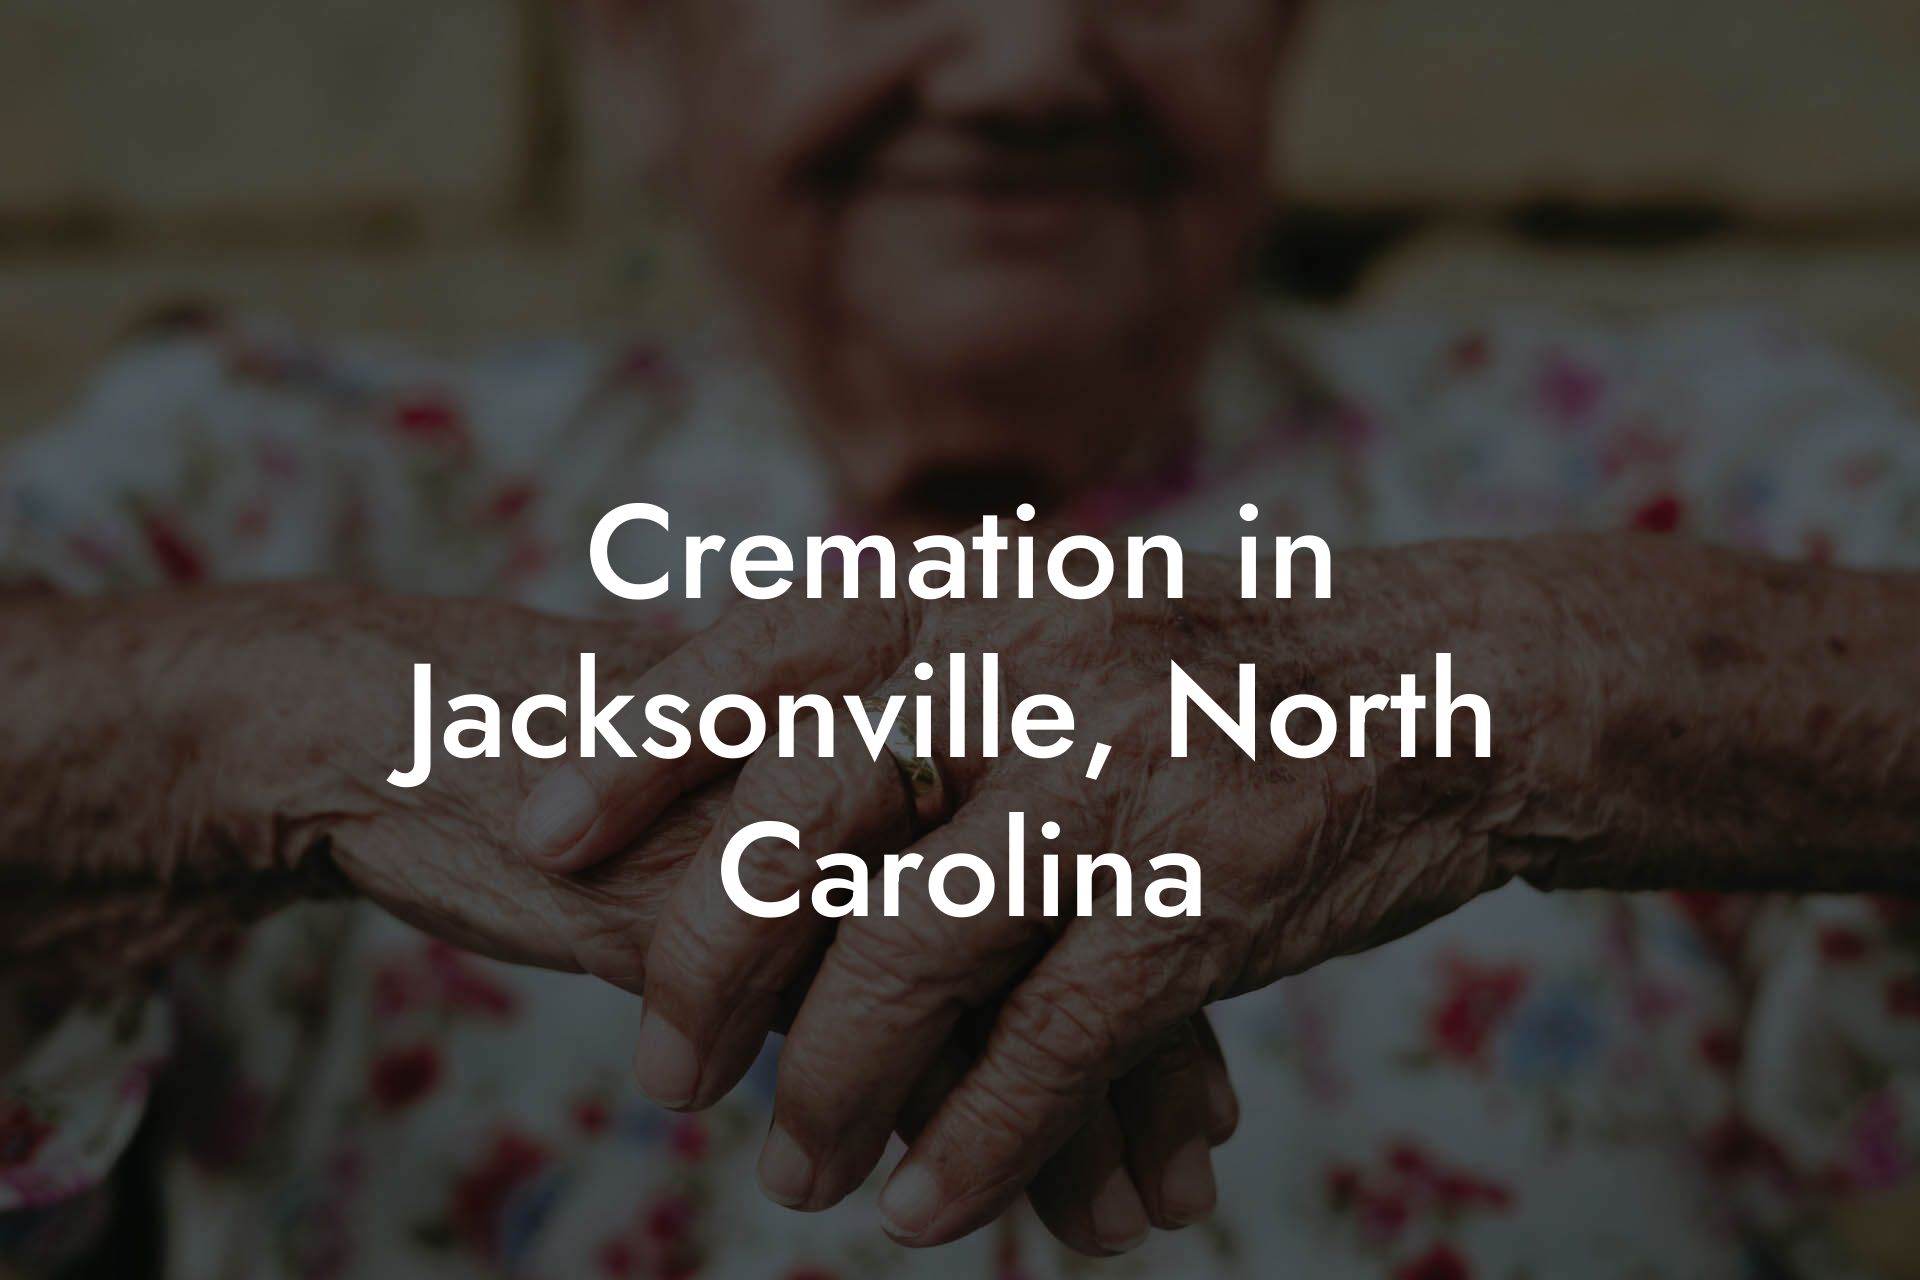 Cremation in Jacksonville, North Carolina